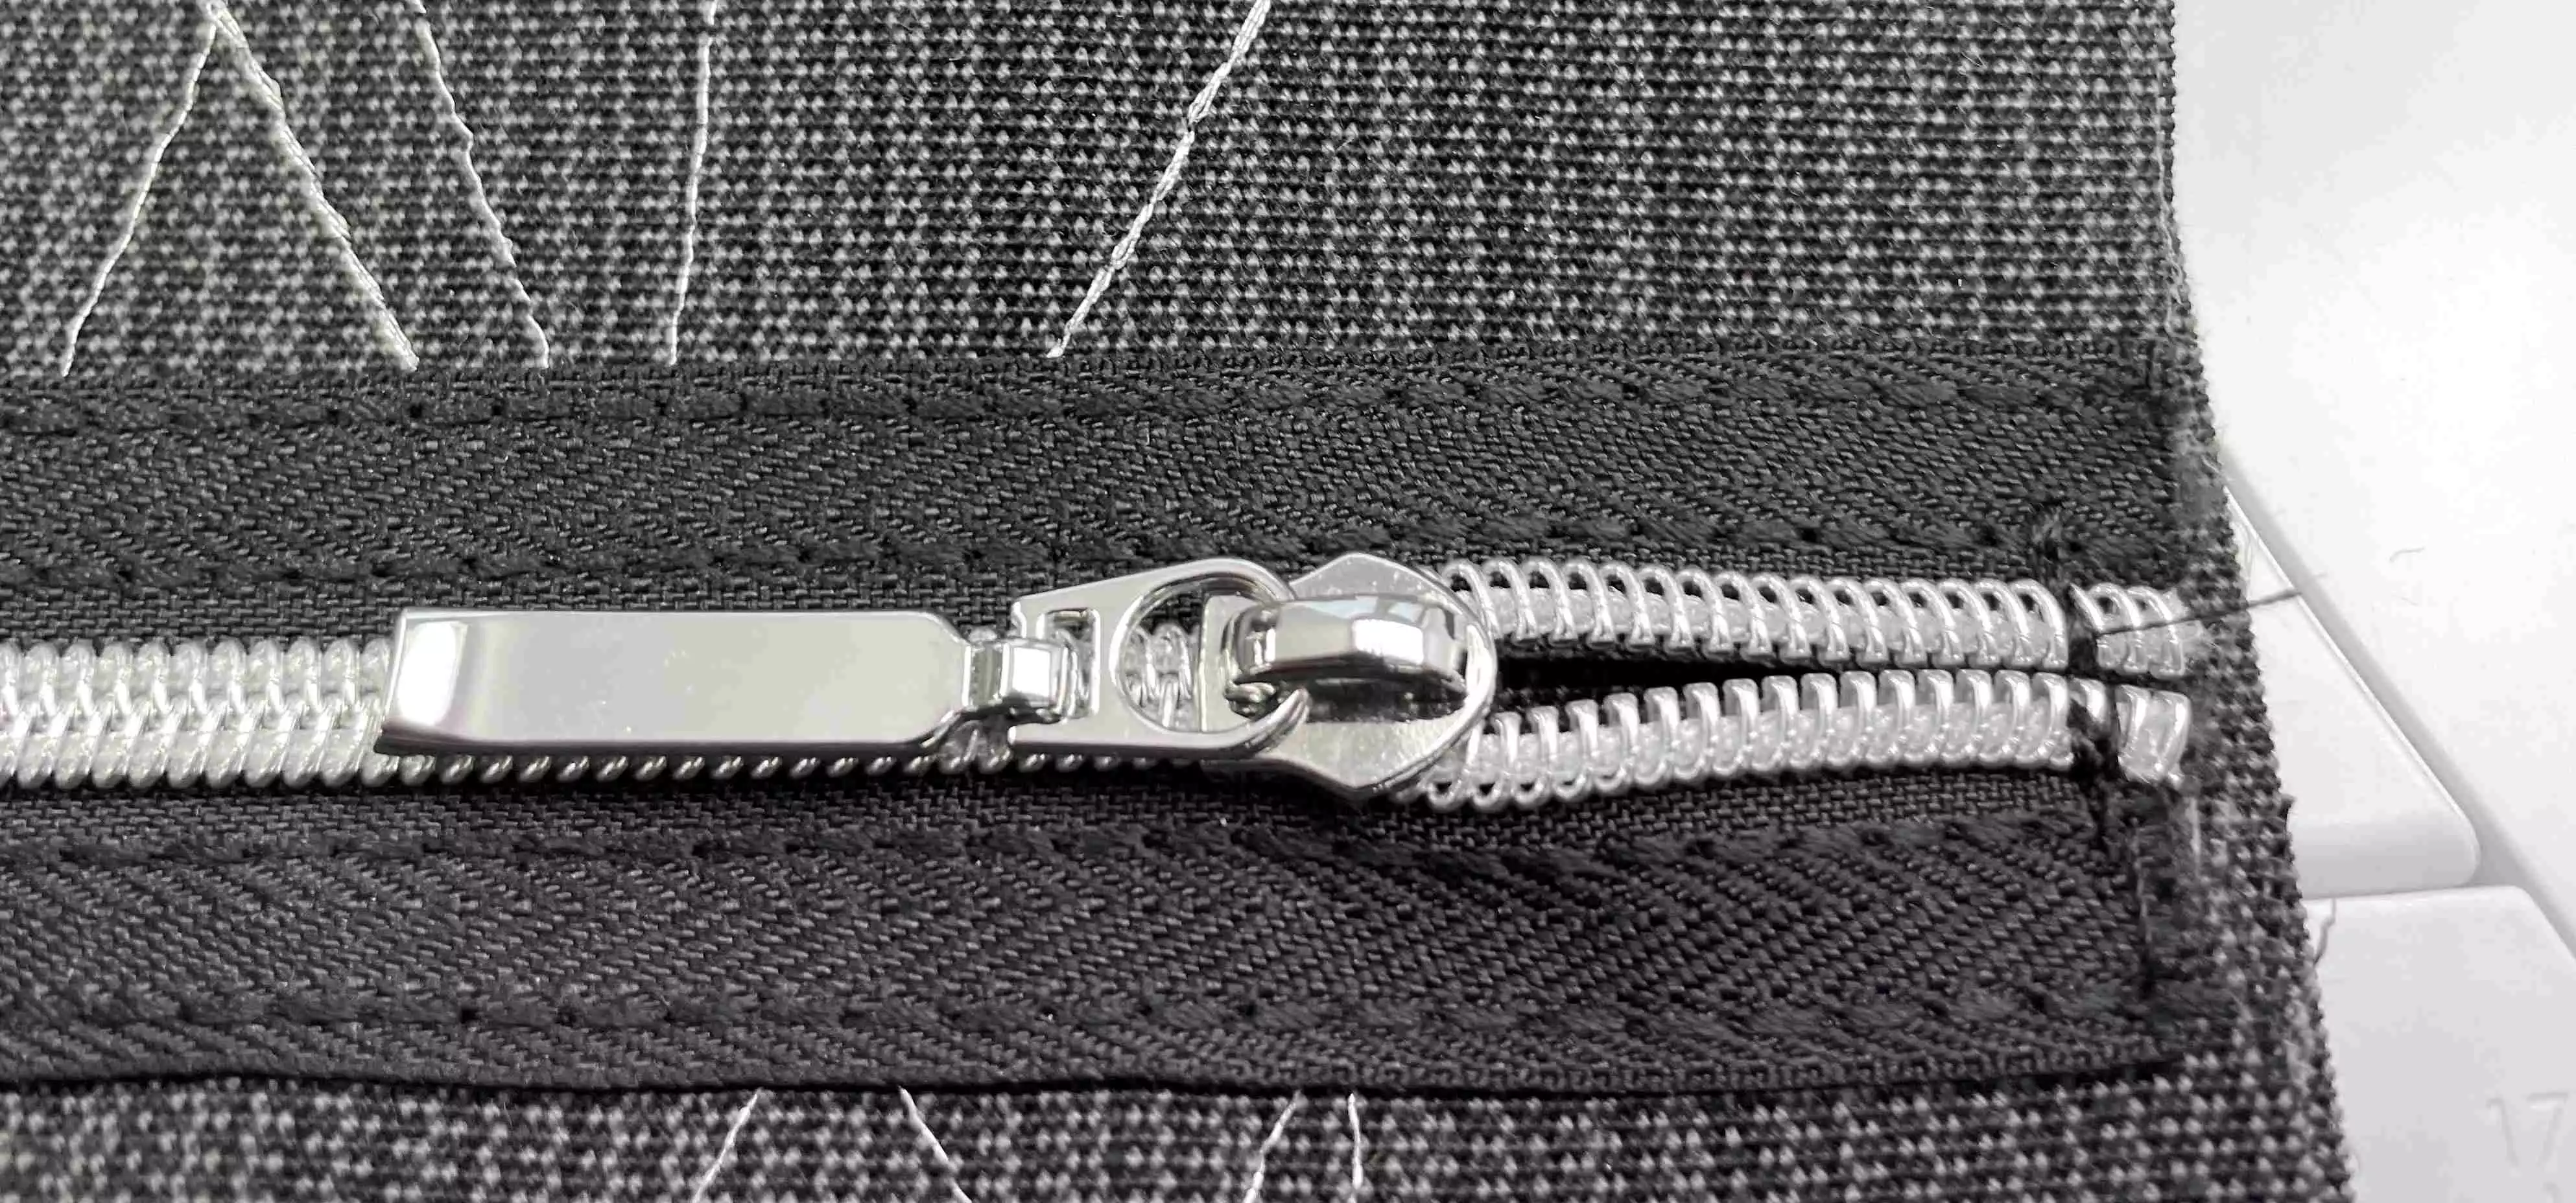 Simple-zippered-pouch-alt2-step5-zipper-ends-secured.jpg